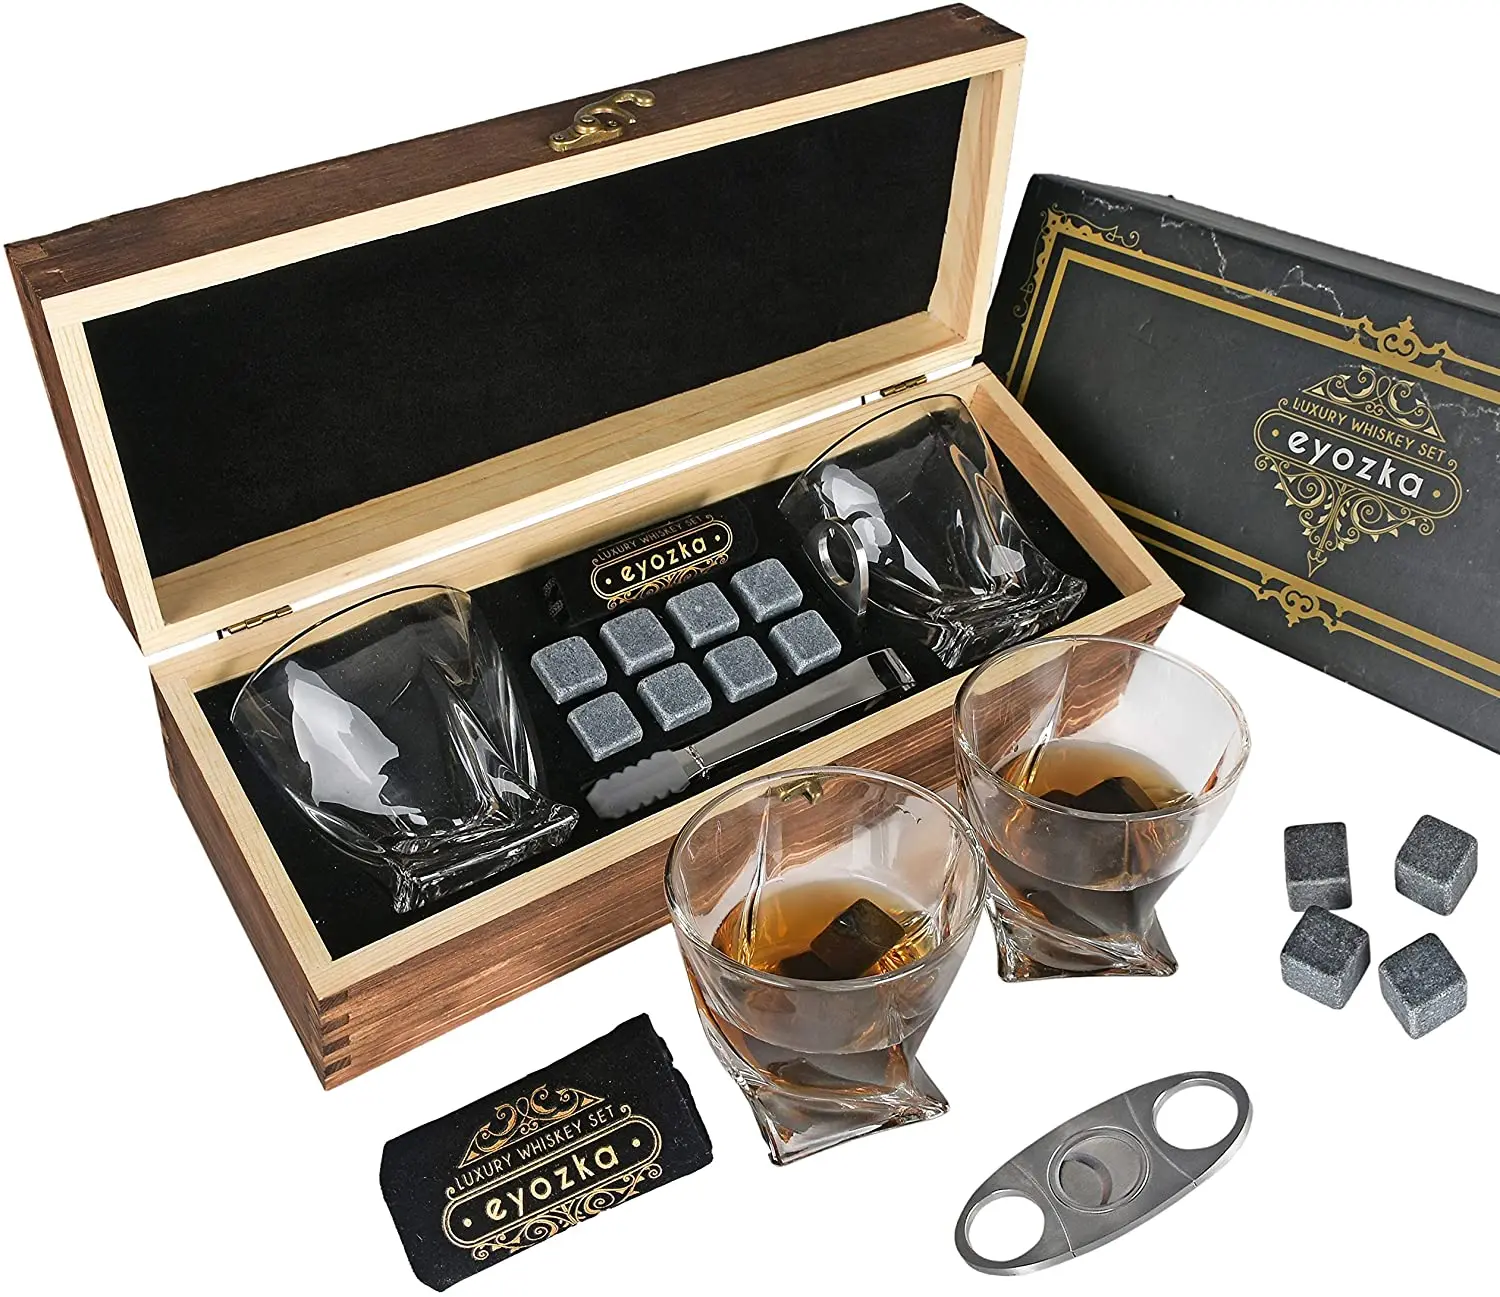 Eyozka Whiskey Glasses Set Gift Box: $ 49.99 at Amazon